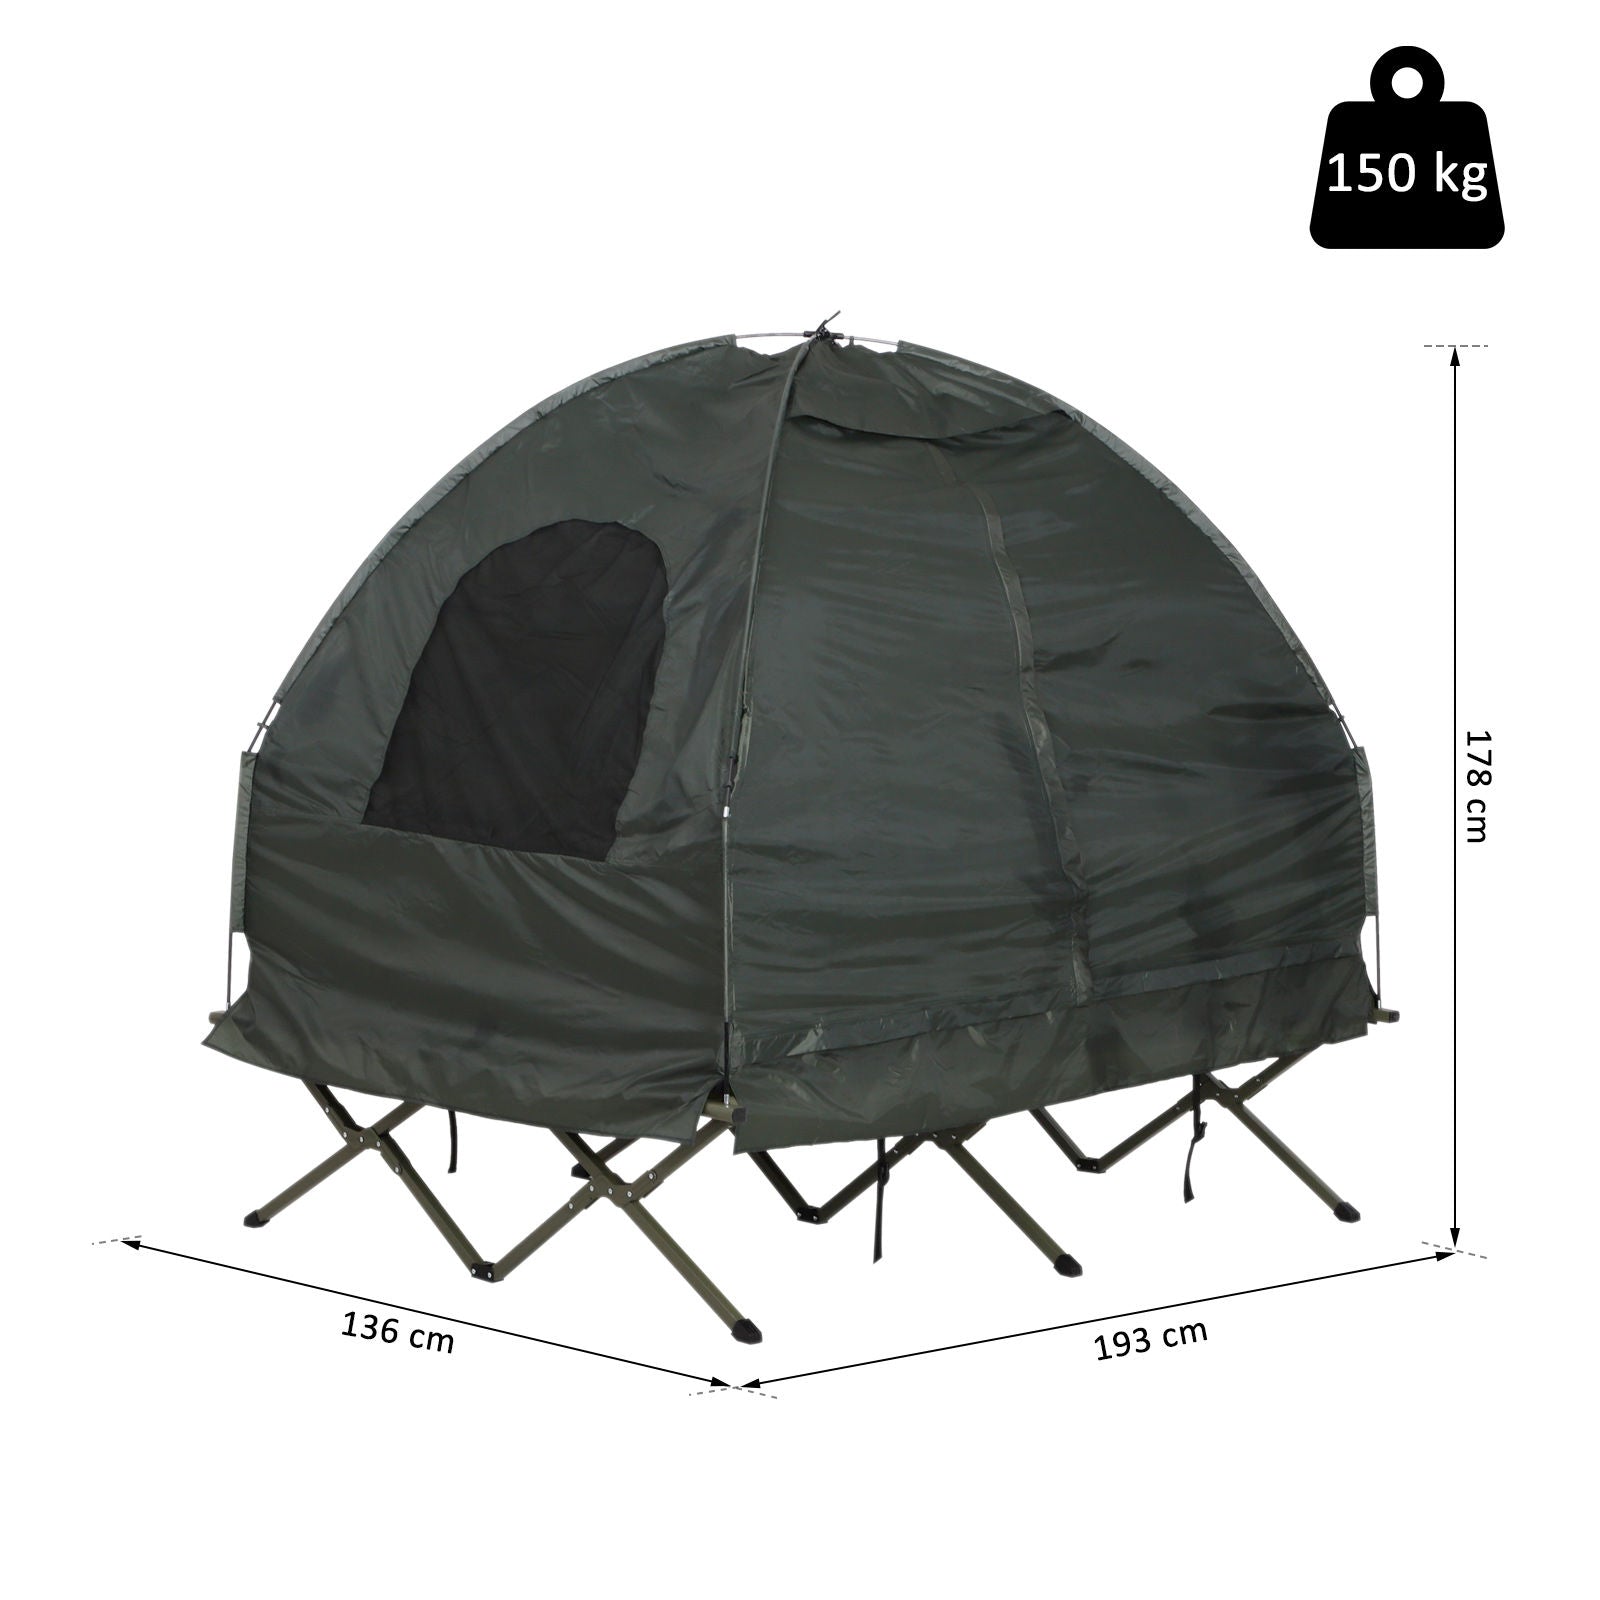 Nancy's Pacbitun Camping Bed Dome - Groen - Legering, Staal, Stof - 75,98 cm x 53,54 cm x 16,53 cm